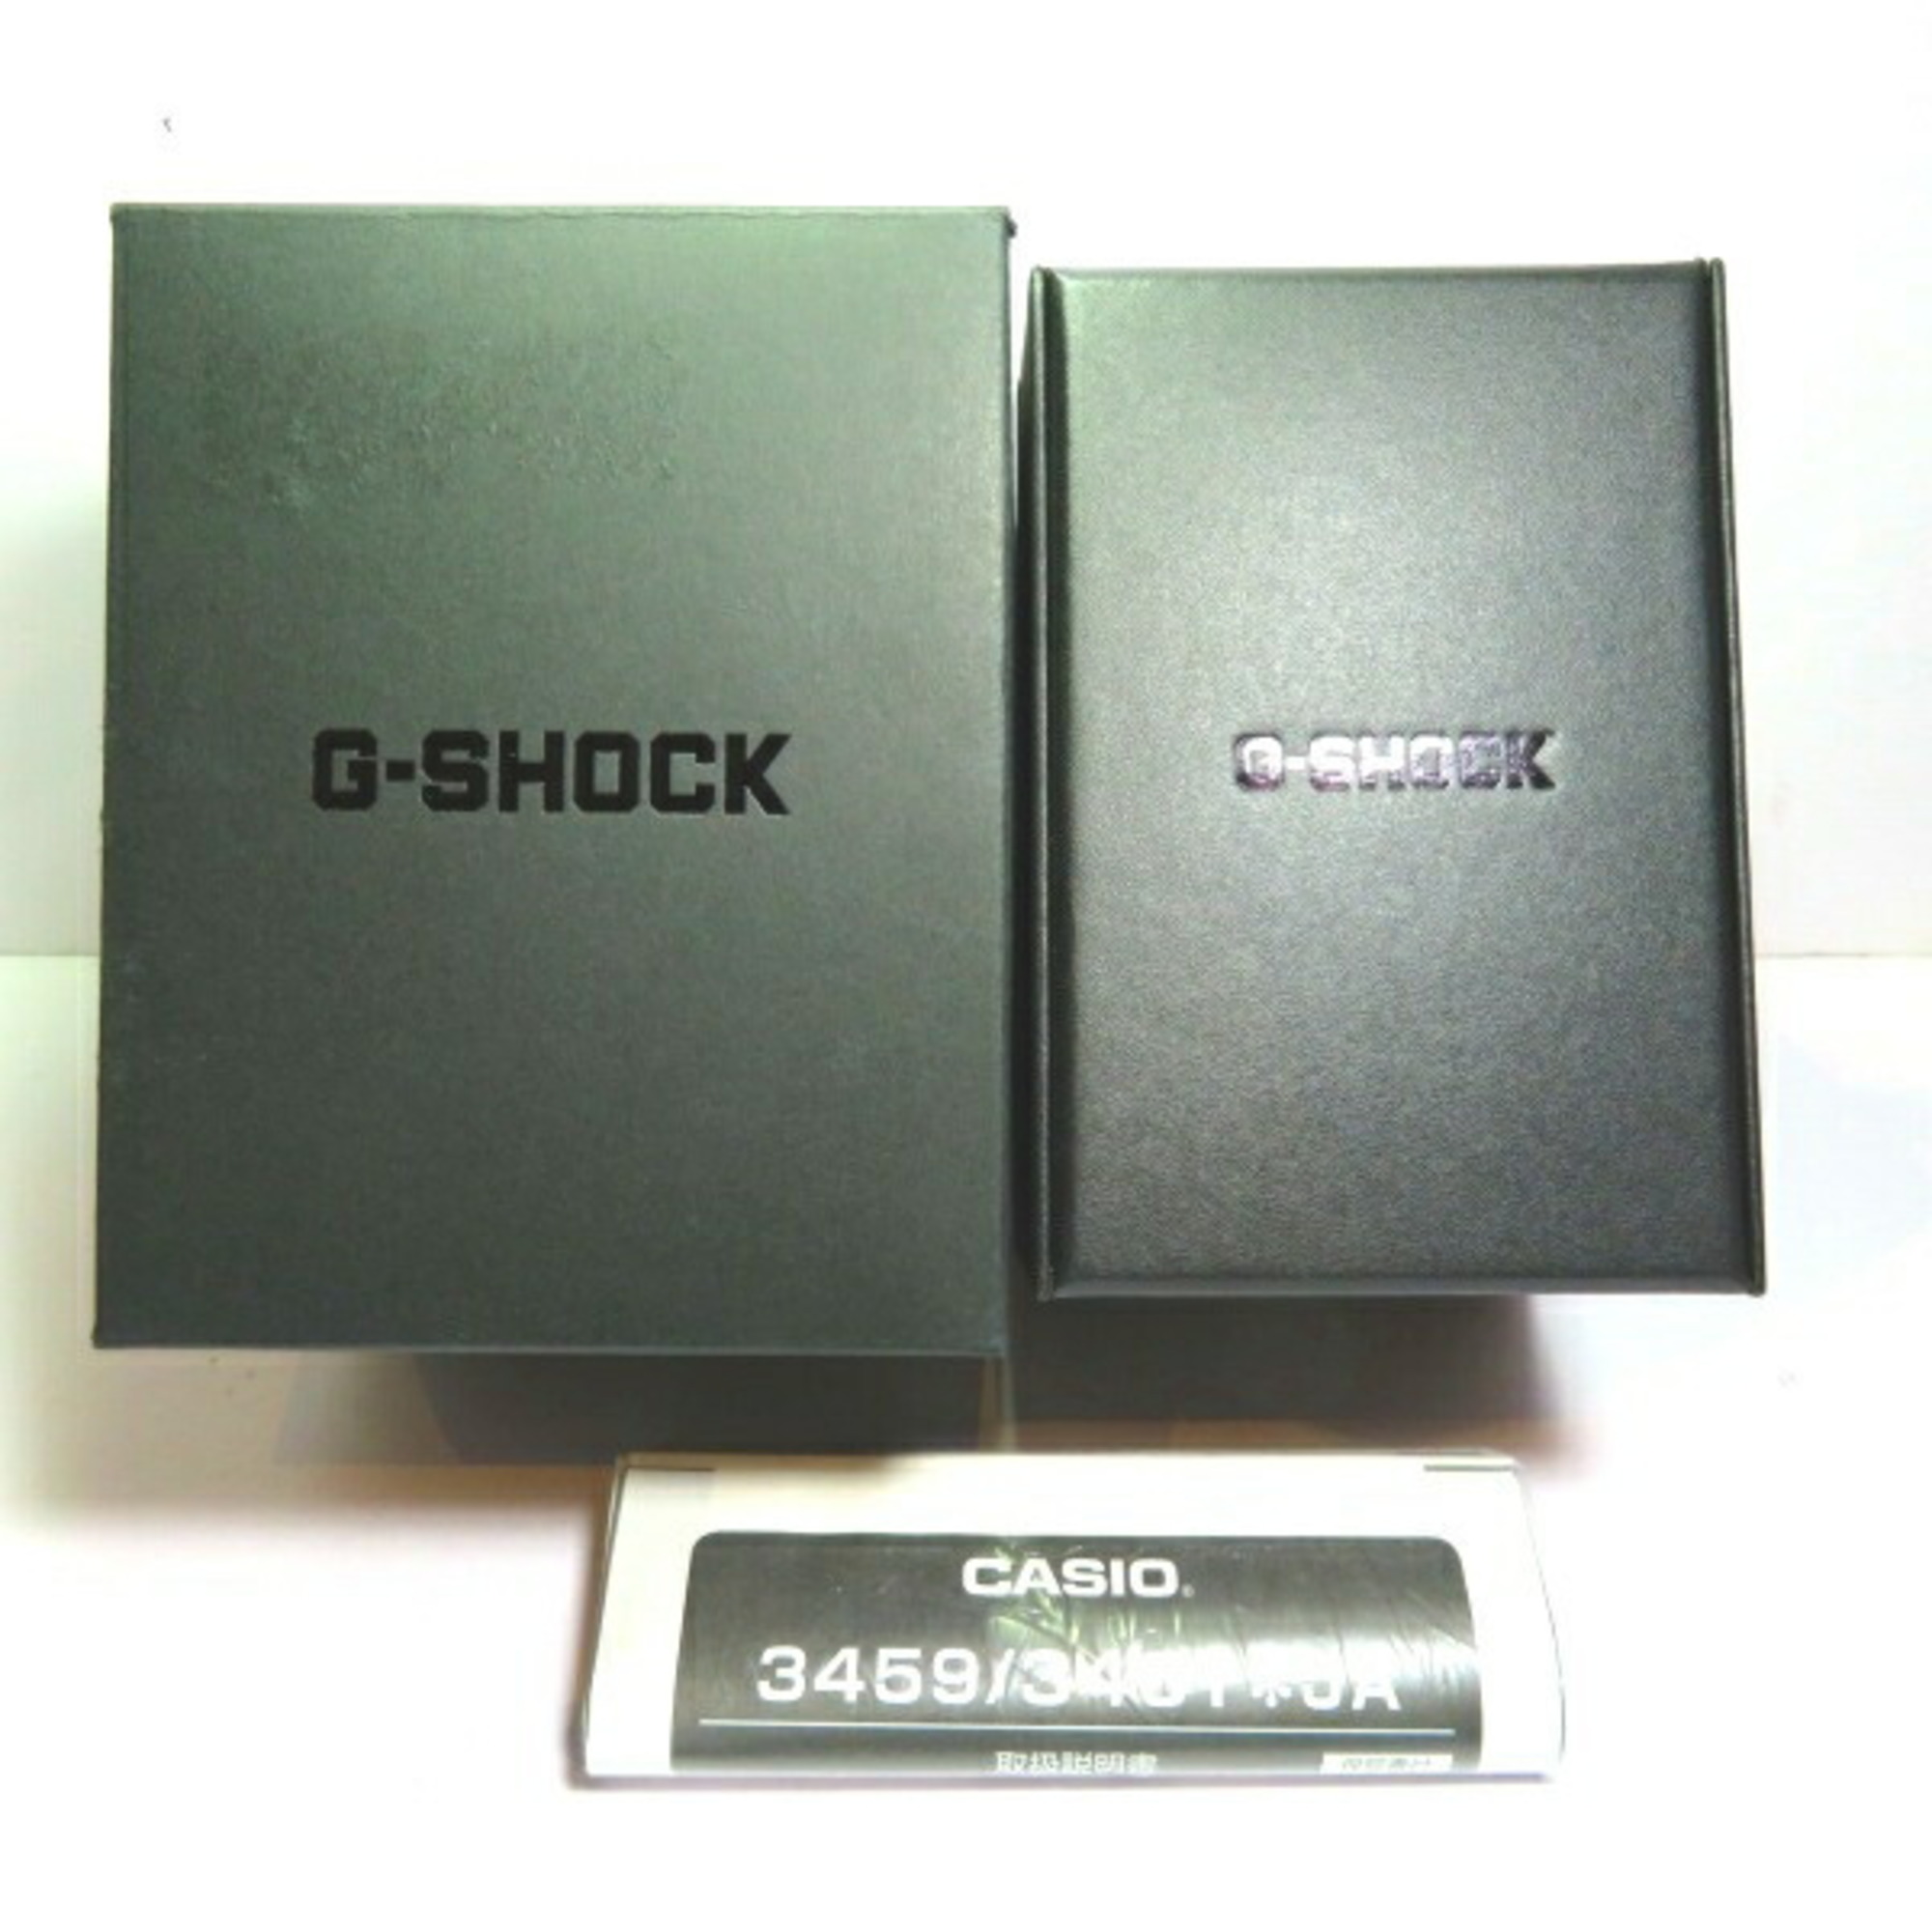 Casio Full Metal Smartphone Link GMW-B5000D-1JF Solar Watch Men's